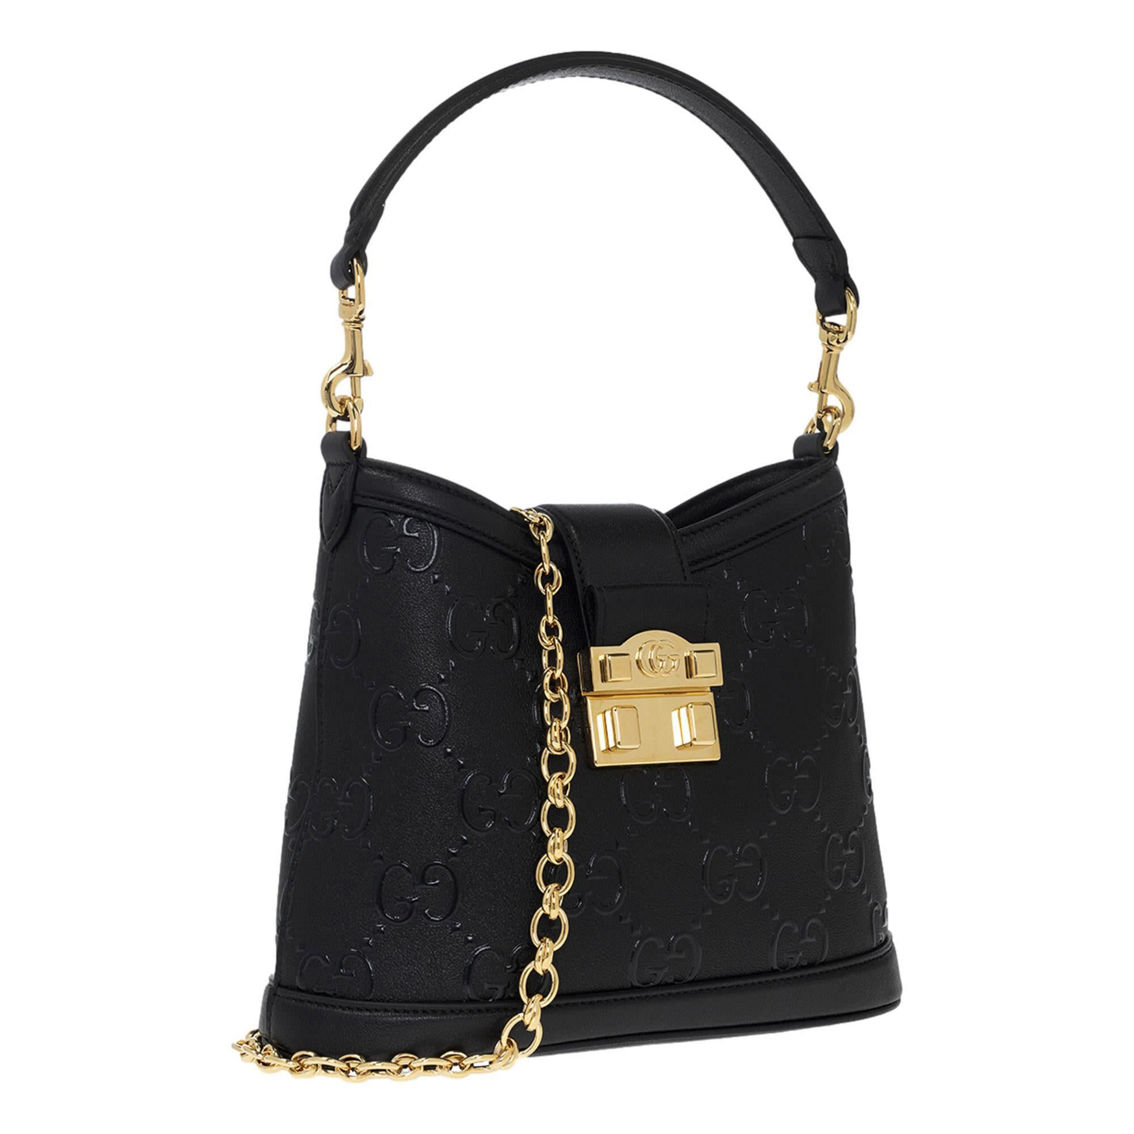 Gucci GG Black Embossed Pebbled Leather Gold Chain Shoulder Bag - Image 4 of 5